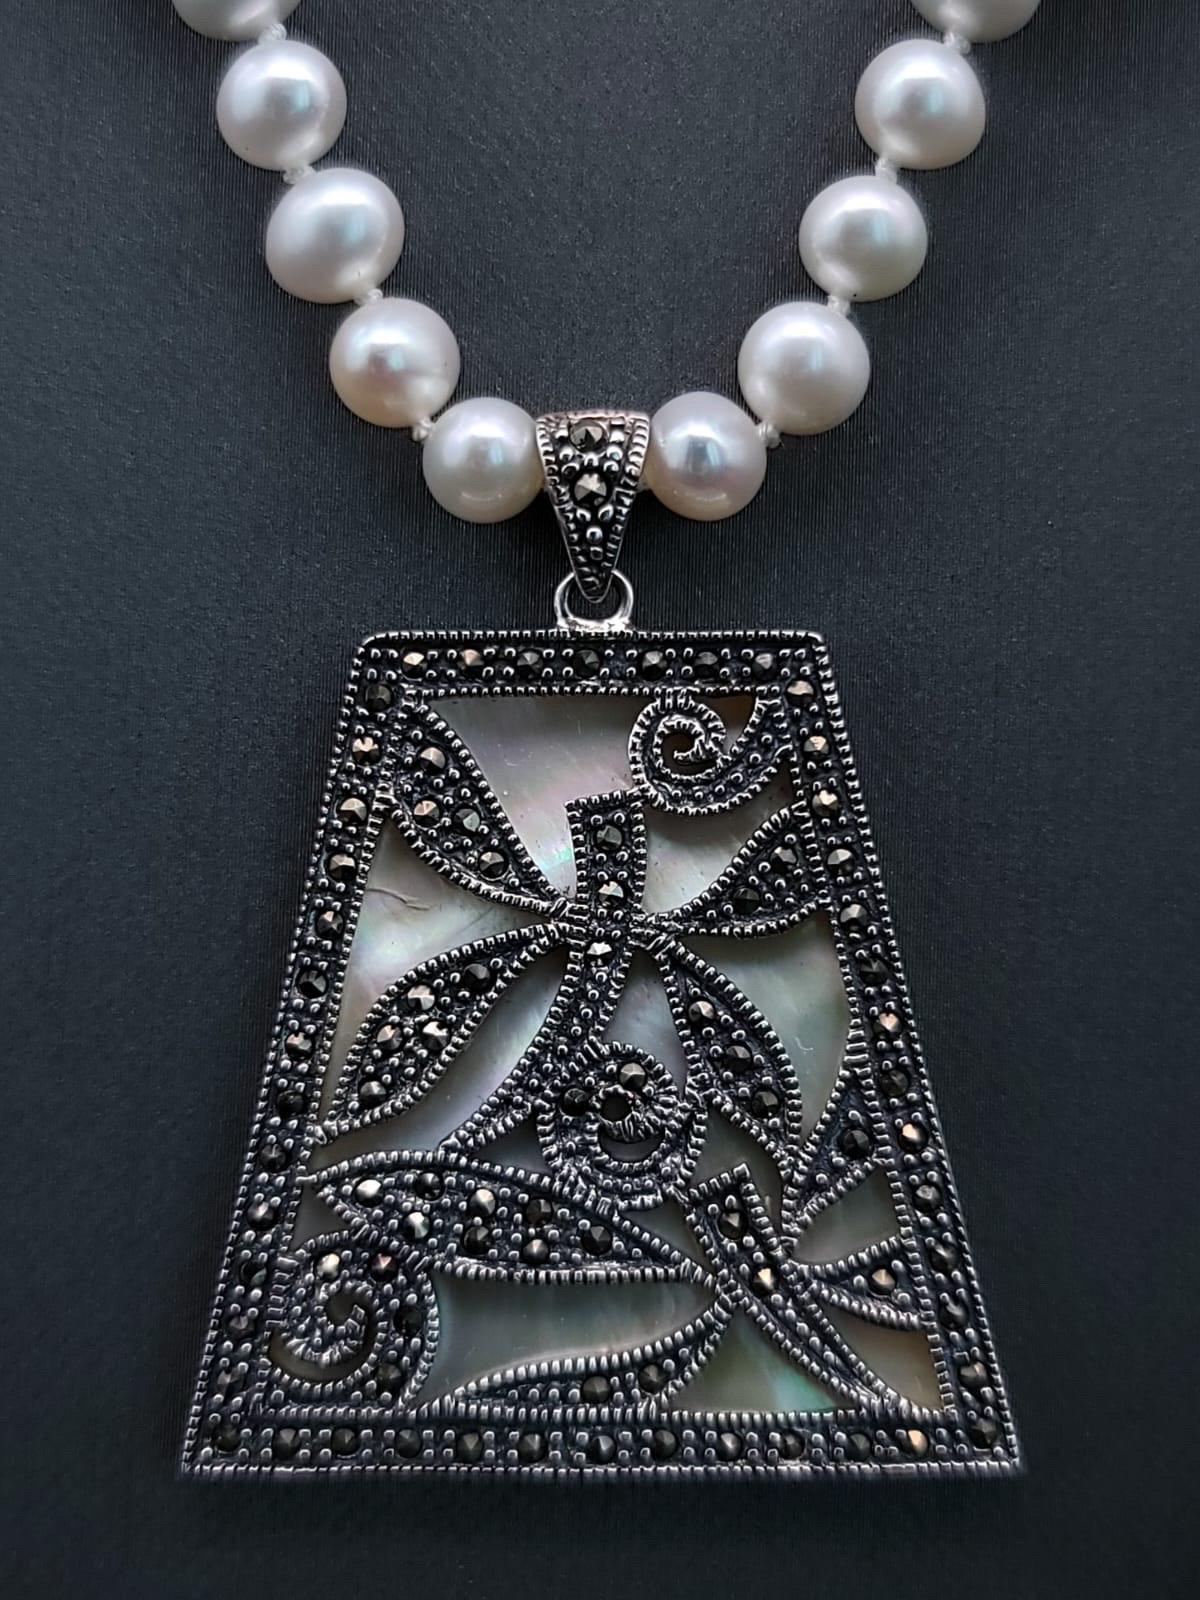 A.Jeschel Elegant Long Baroque Necklace with pendant. For Sale 3